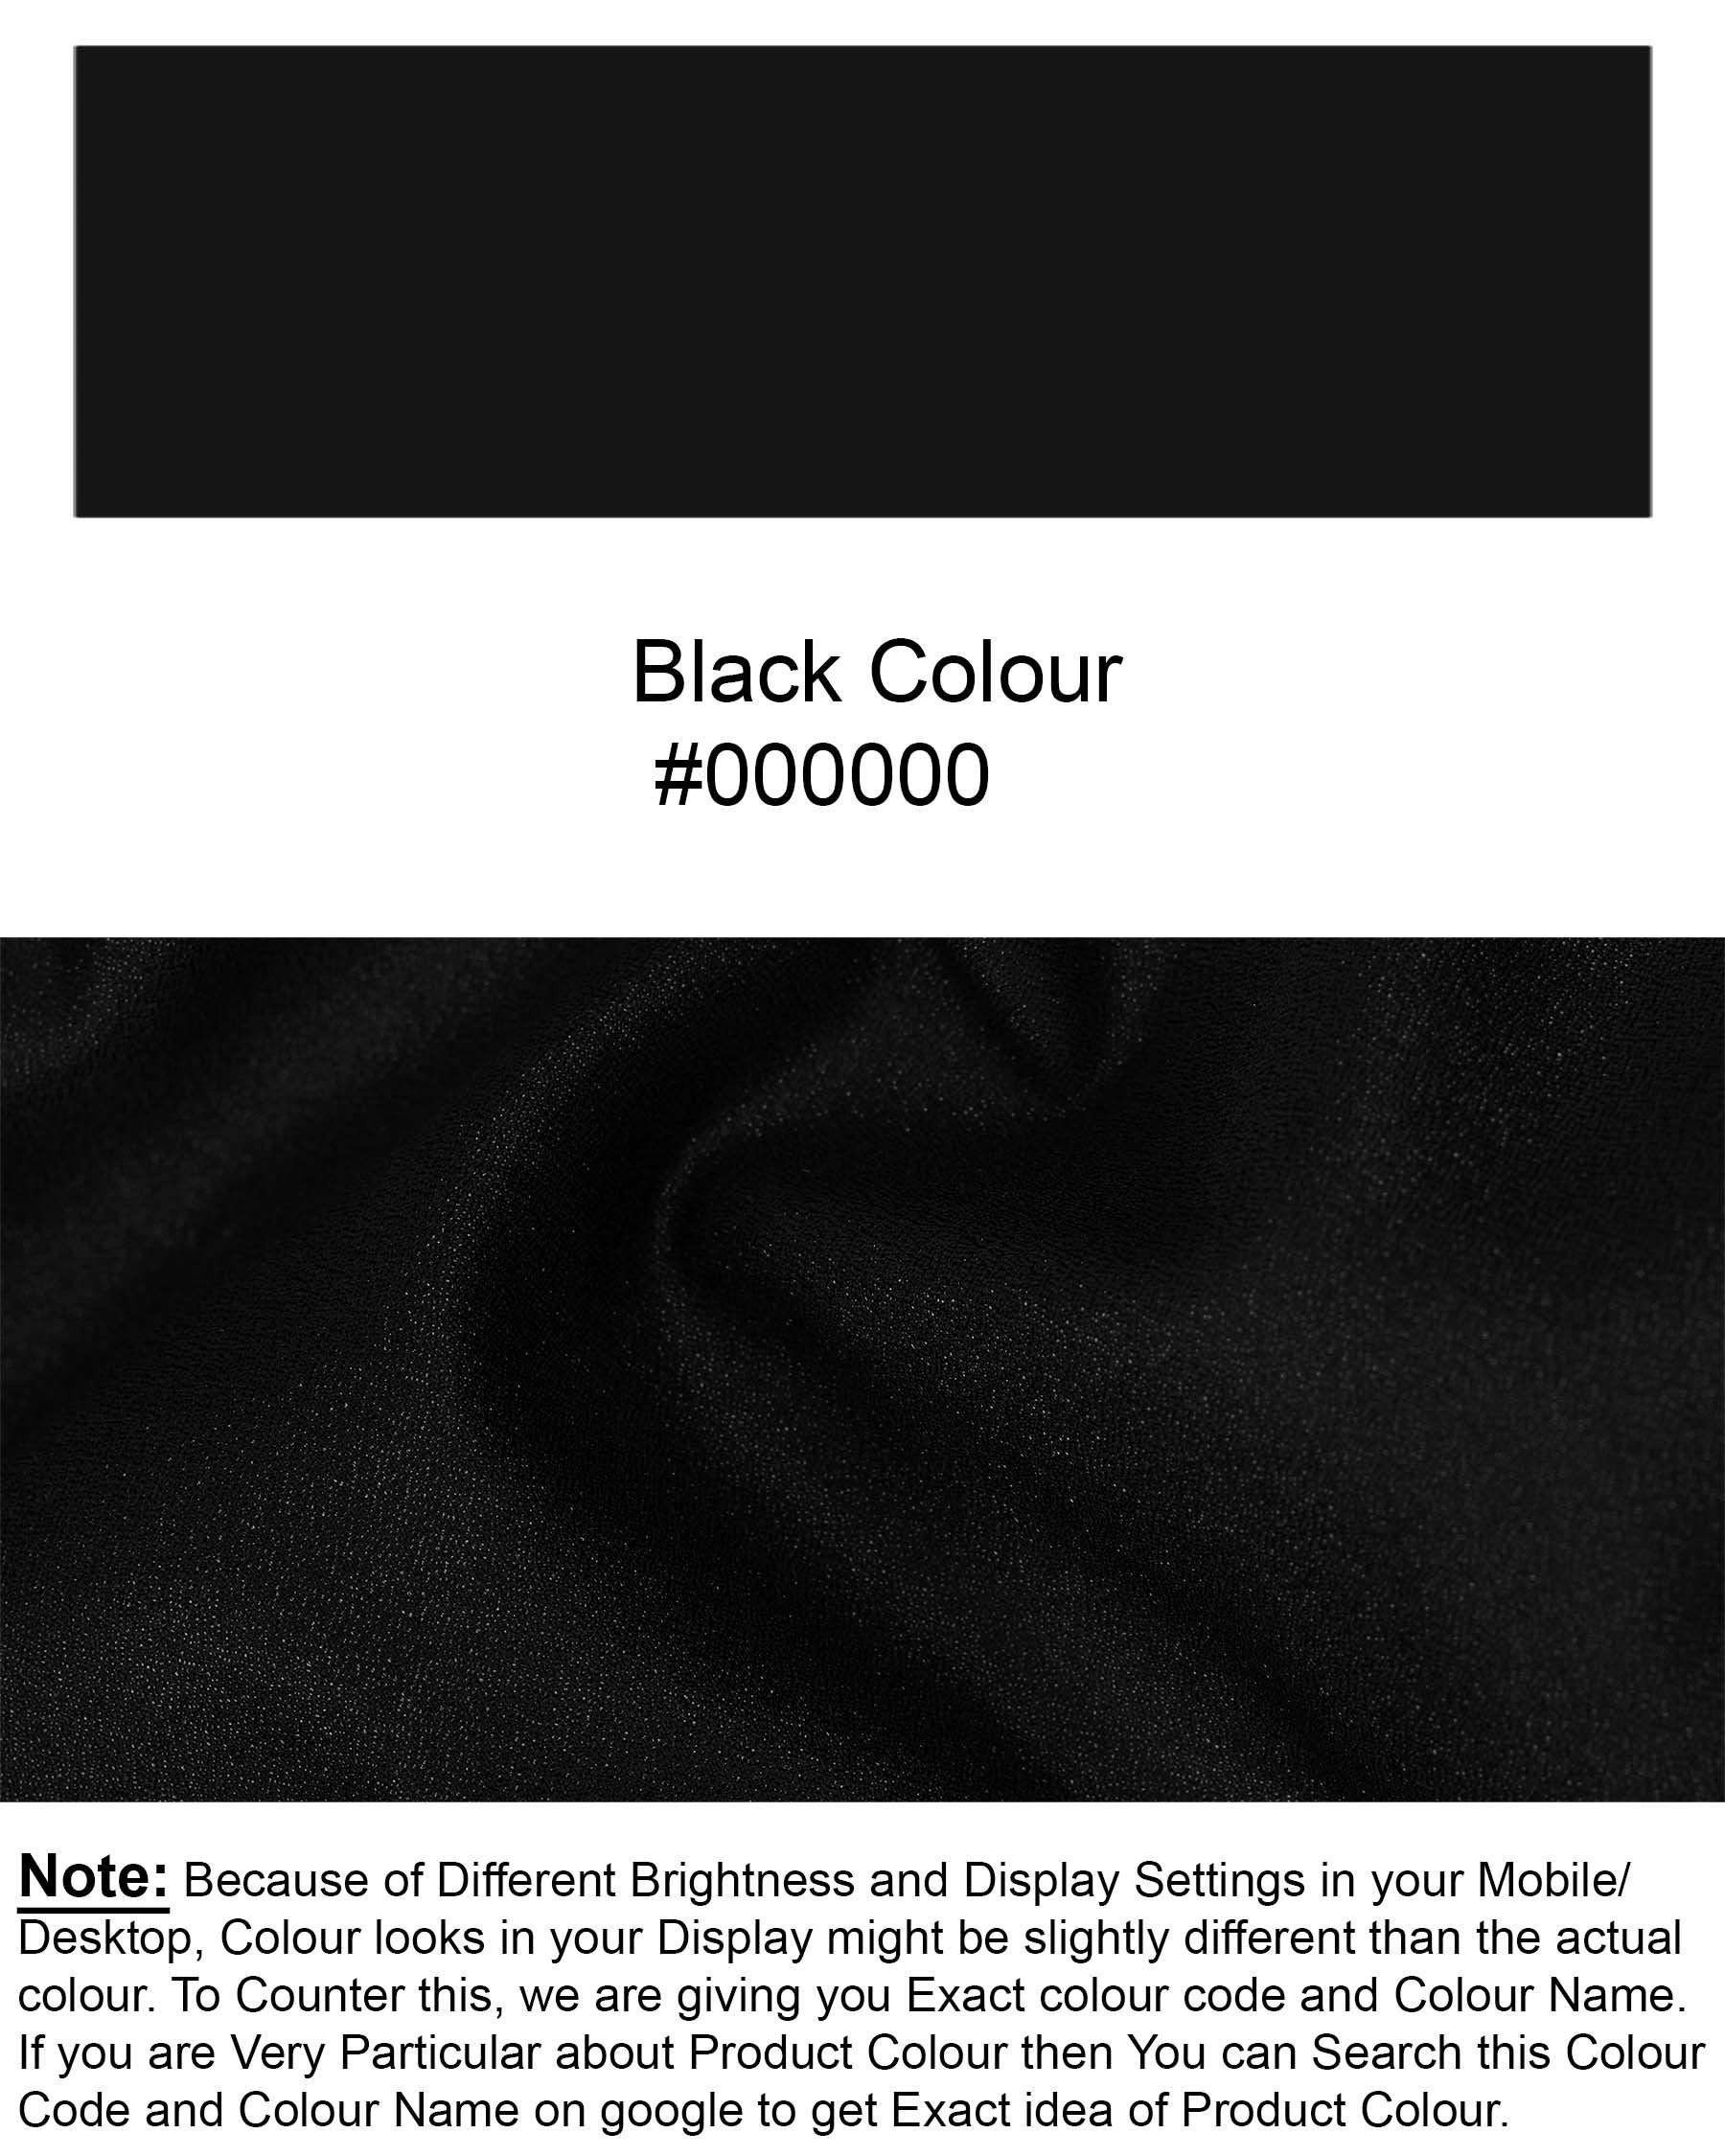 Jade Black Textured Waistcoat V1683-36, V1683-38, V1683-40, V1683-42, V1683-44, V1683-46, V1683-48, V1683-50, V1683-52, V1683-54, V1683-56, V1683-58, V1683-60